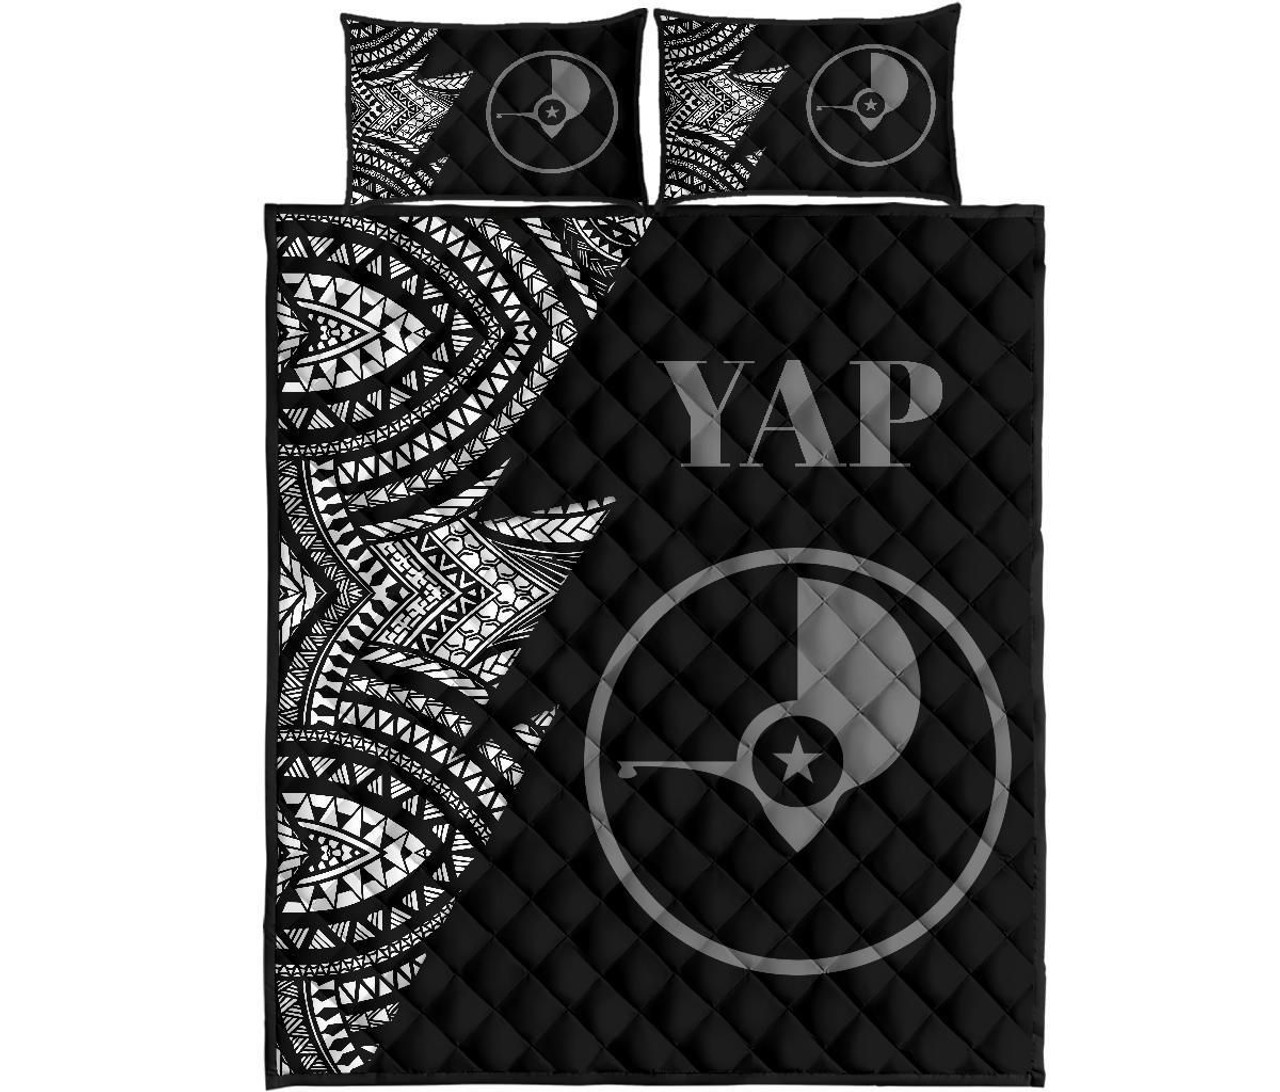 Yap Quilt Bed Set - Yap Flag Flash Version 1